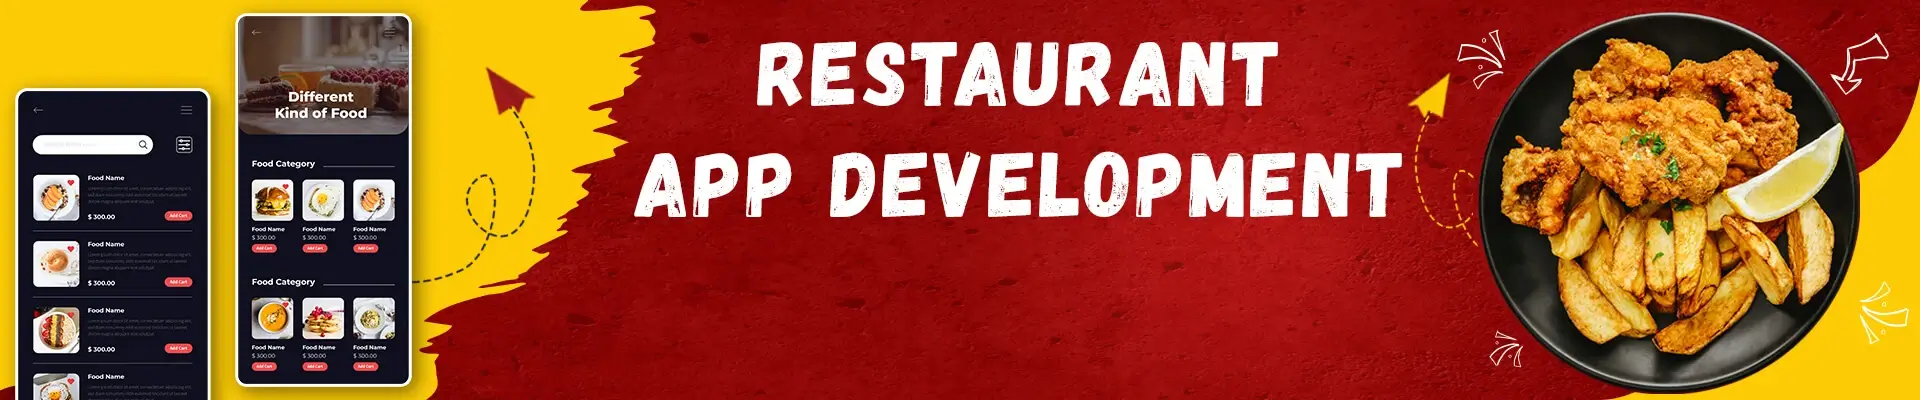 Restaurant App Development: Features and Opportunities [2021-2022]